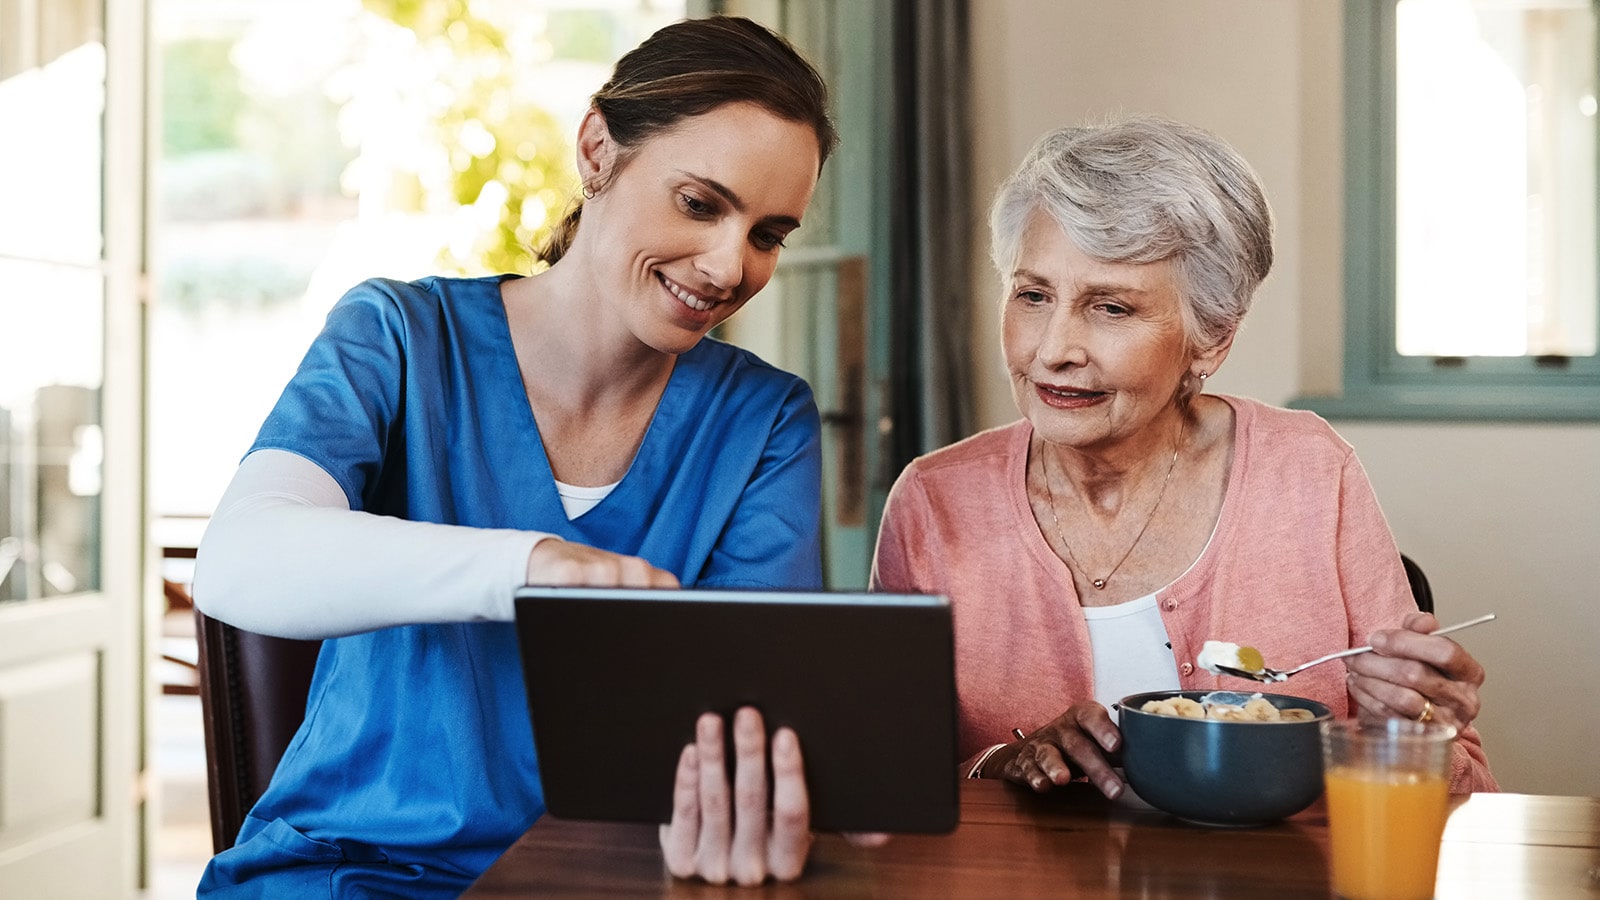 Nurse in blue smock showing elderly woman wearing pink something on a tablet while she eats breakfast